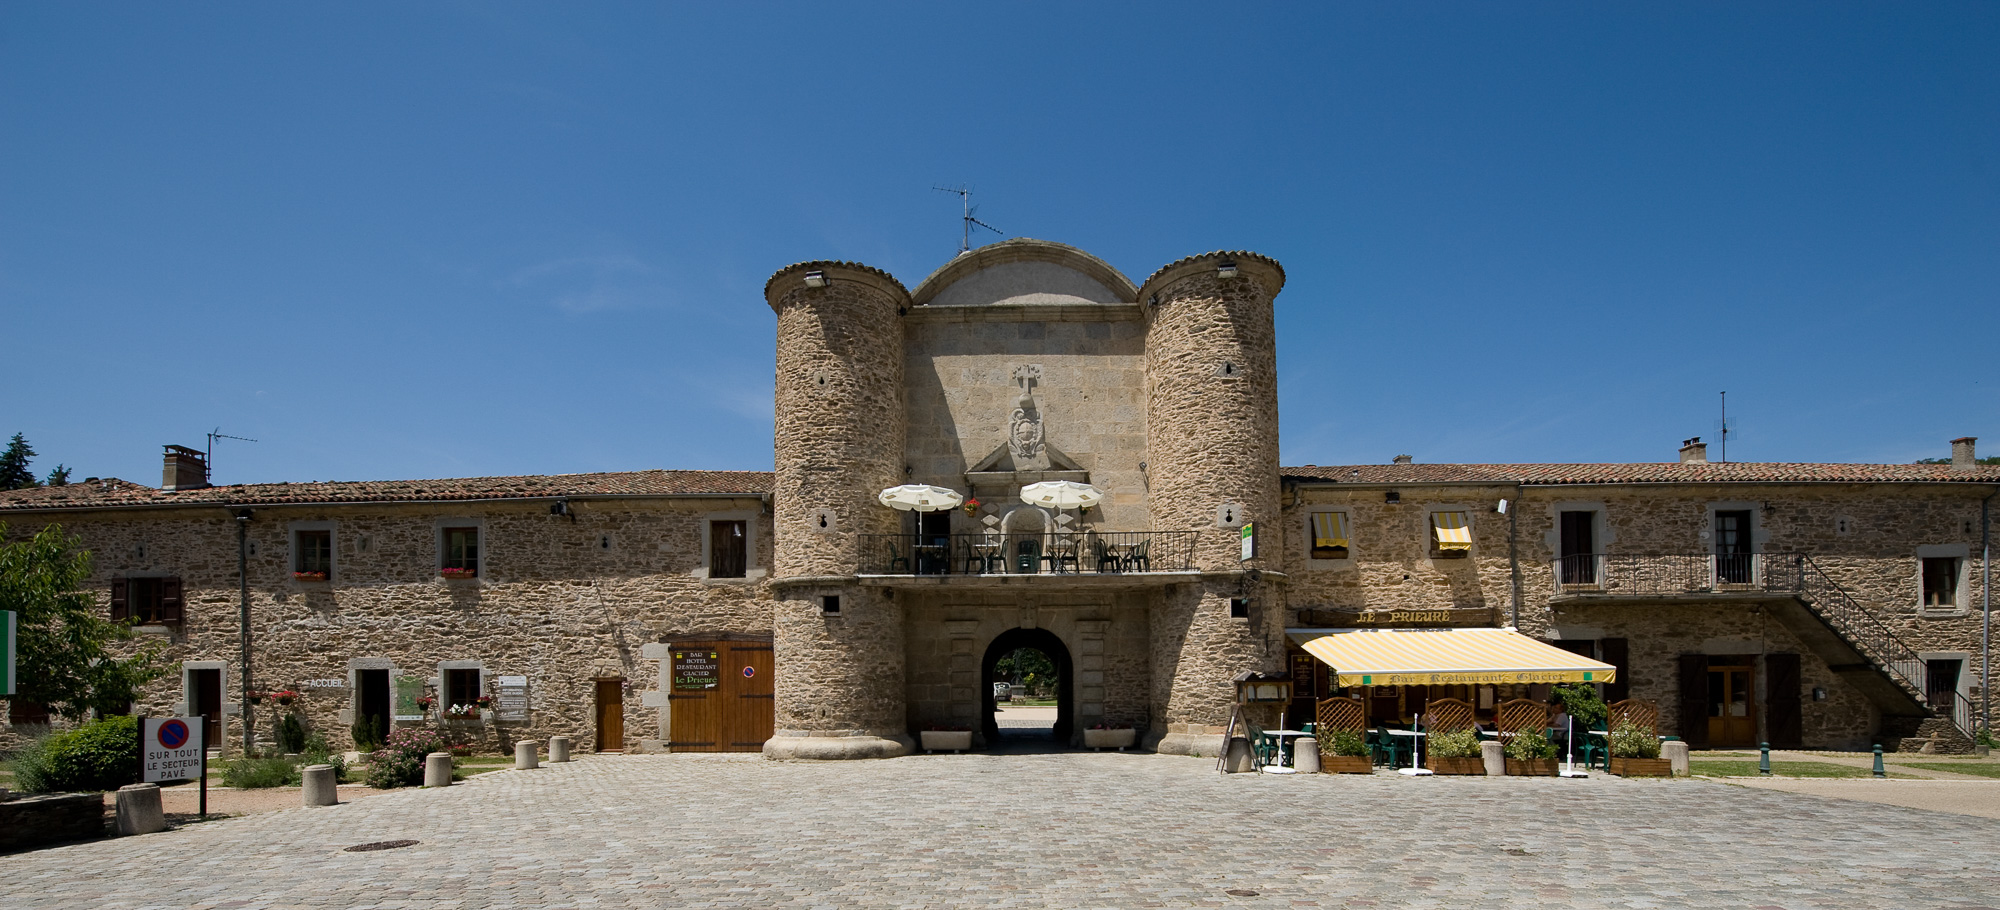 Sainte-Croix-en Jarez : porte fortifiée.